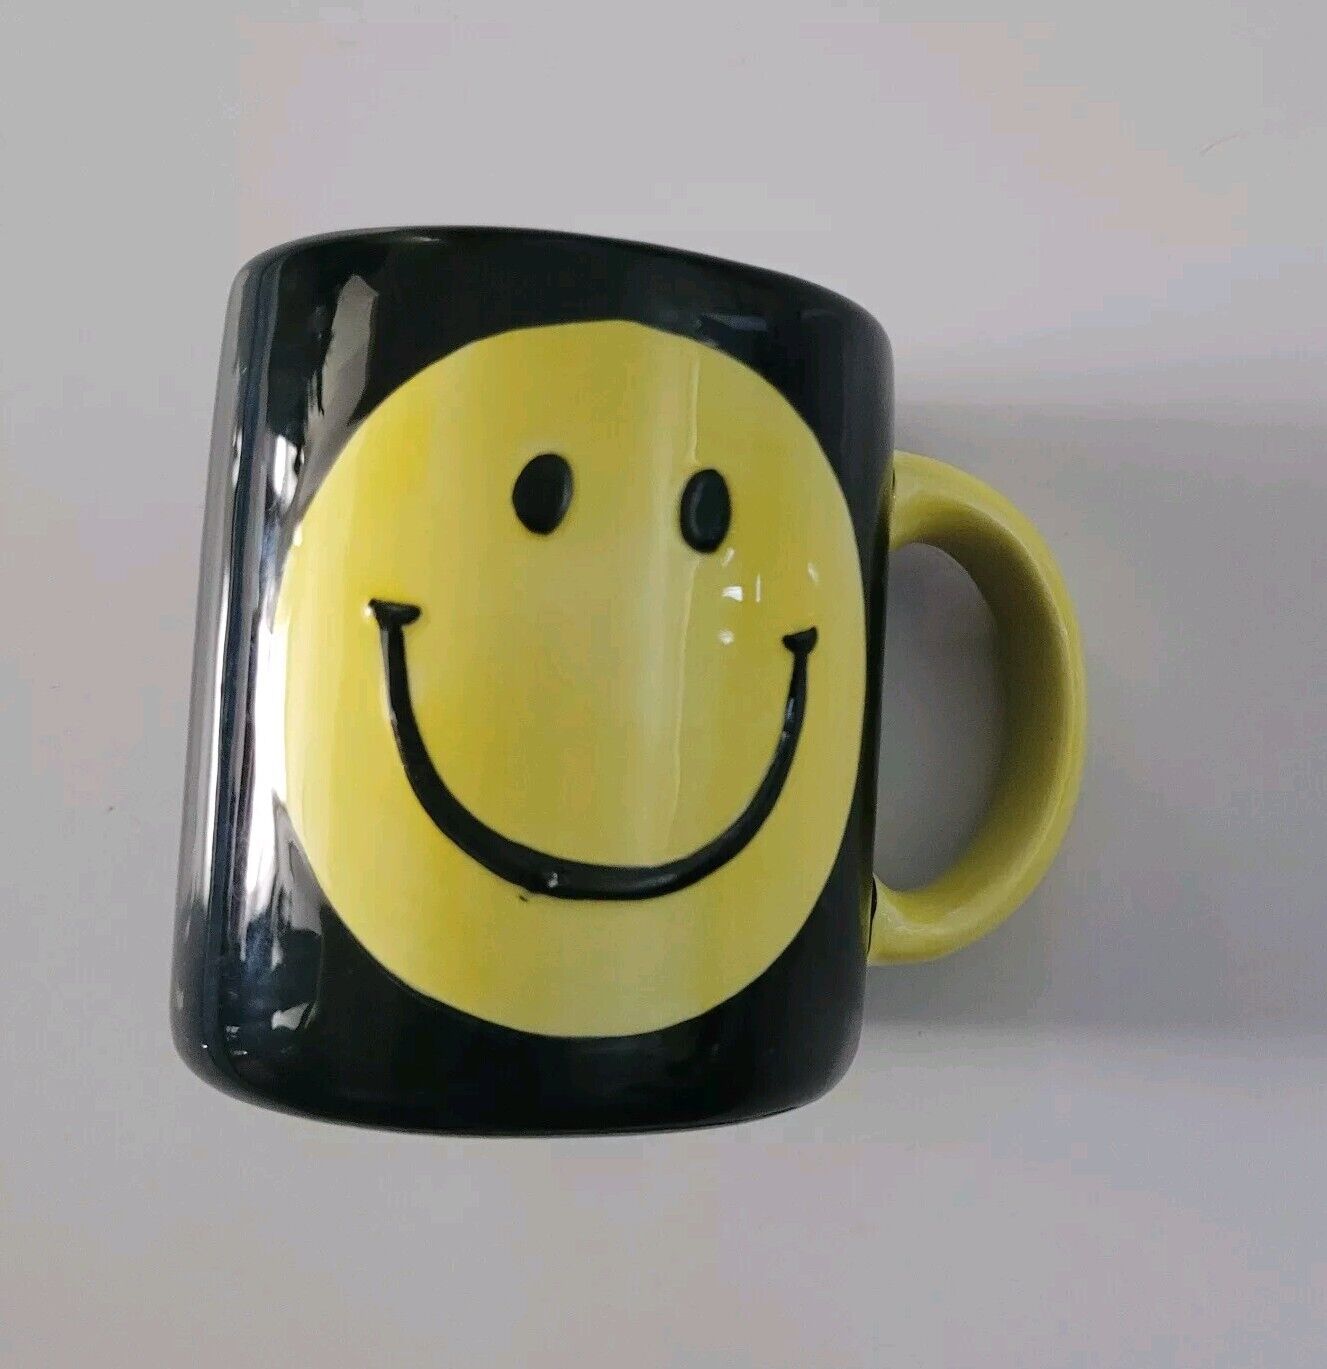 Vintage Smiley Face Mug 1997 Lotus Handcrafted Black Yellow Happy Coffee Cup